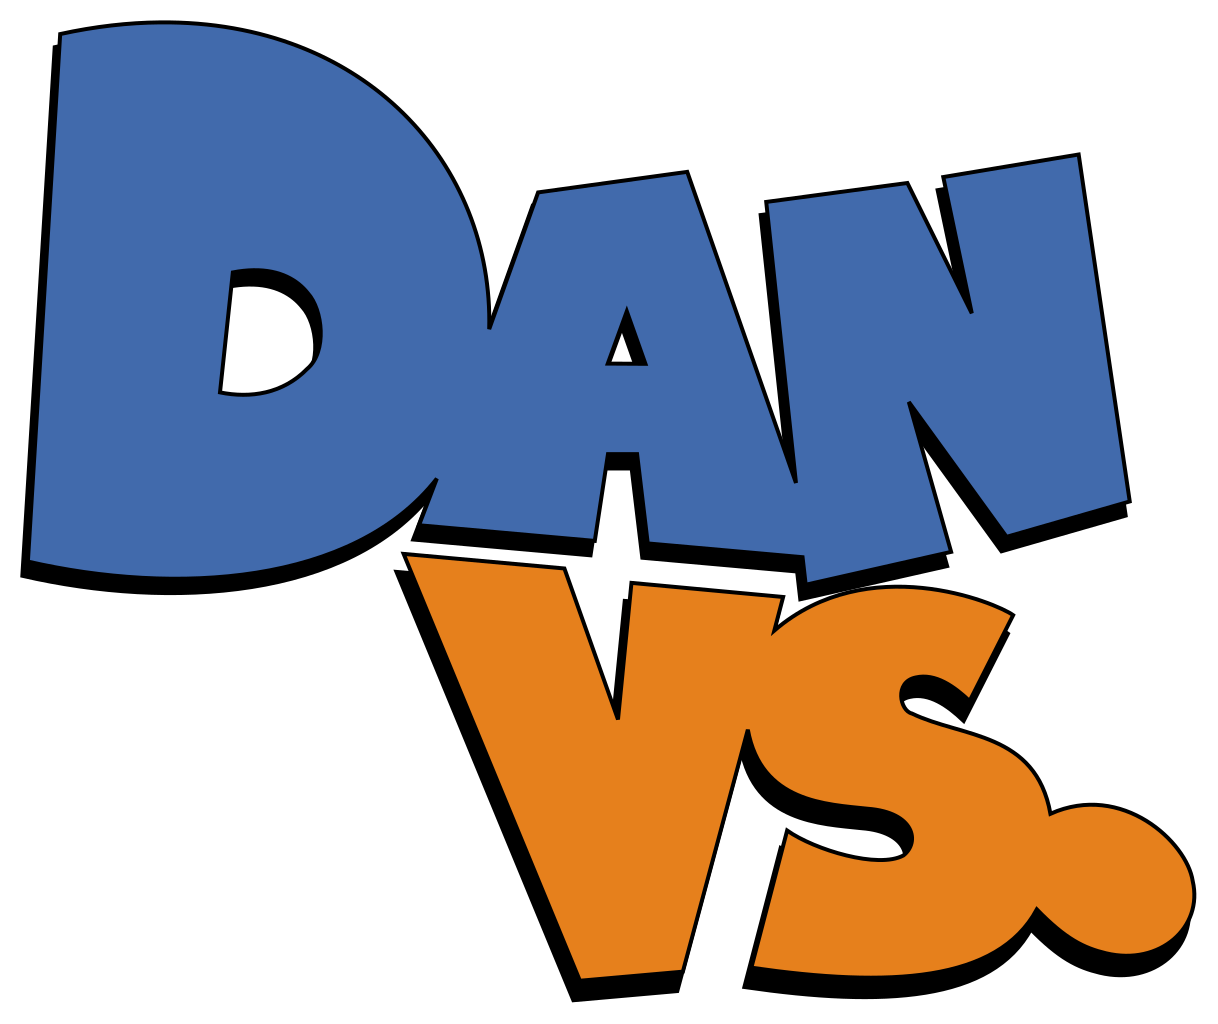 Download File:Dan Vs logo.svg - Wikimedia Commons